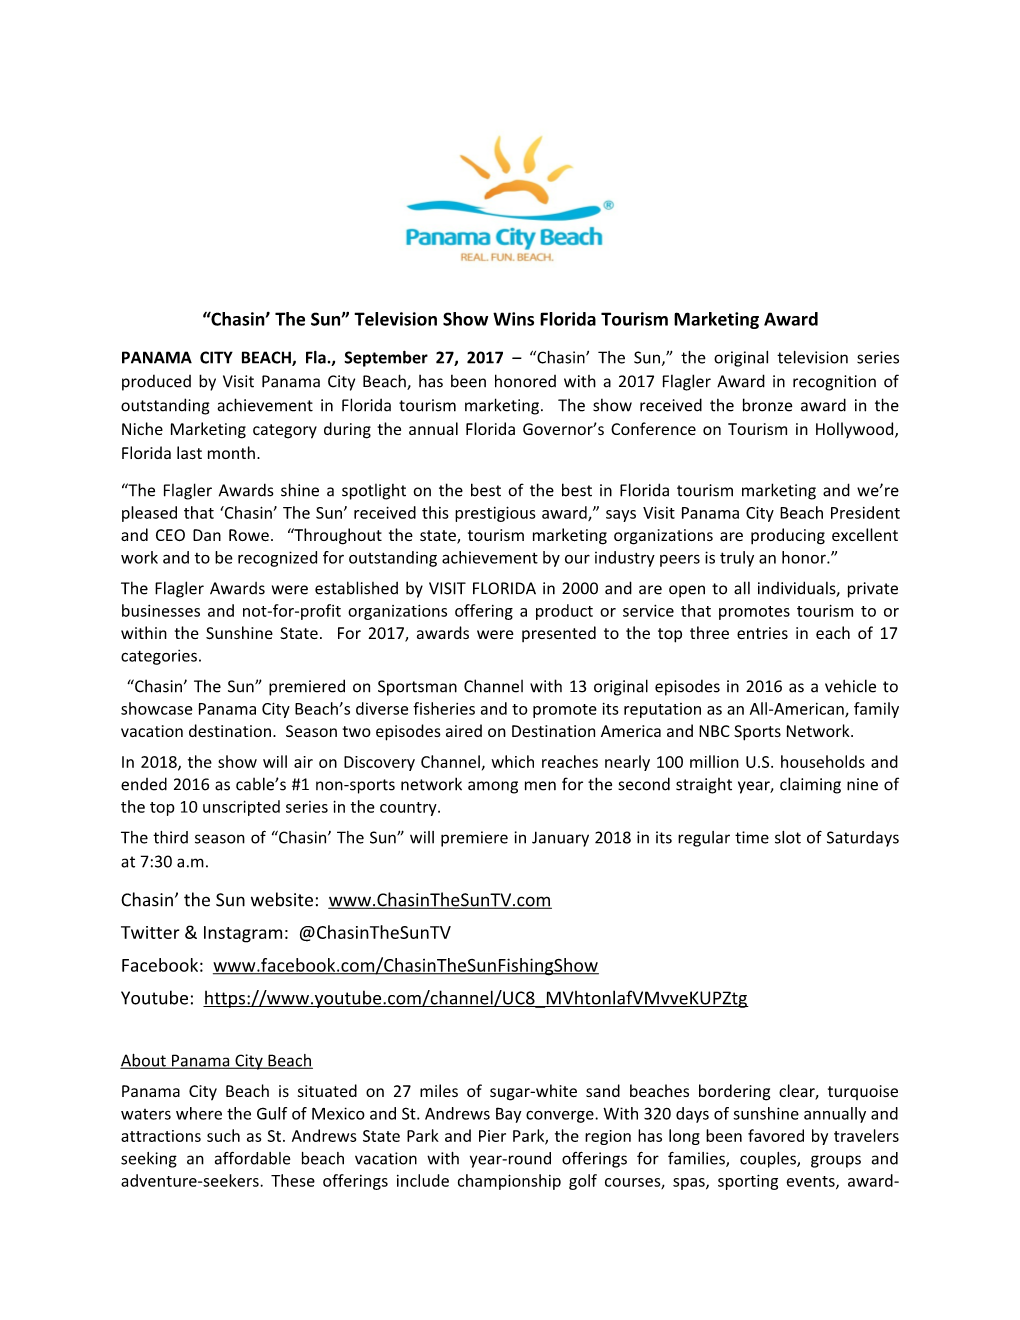 Chasin the Sun Television Show Wins Florida Tourism Marketing Award